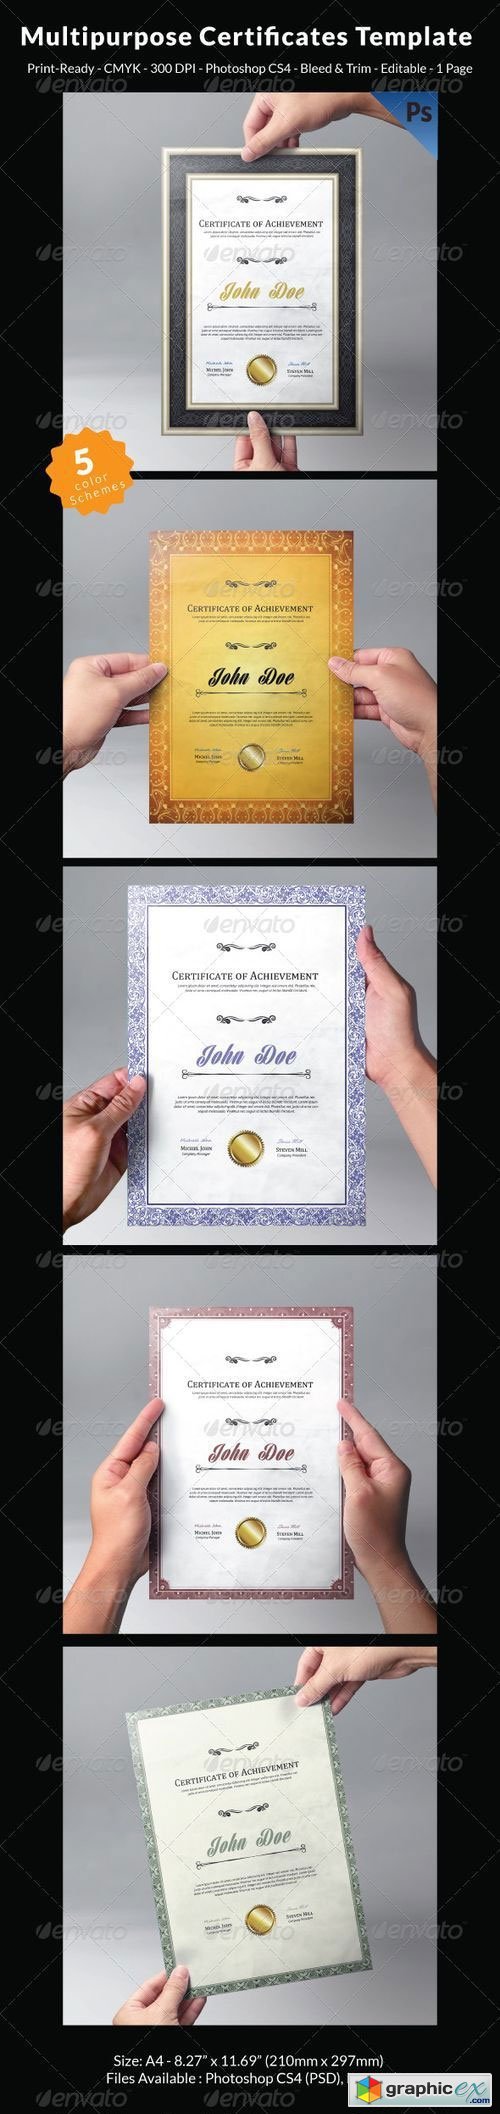 Multipurpose Certificates Template 7251806